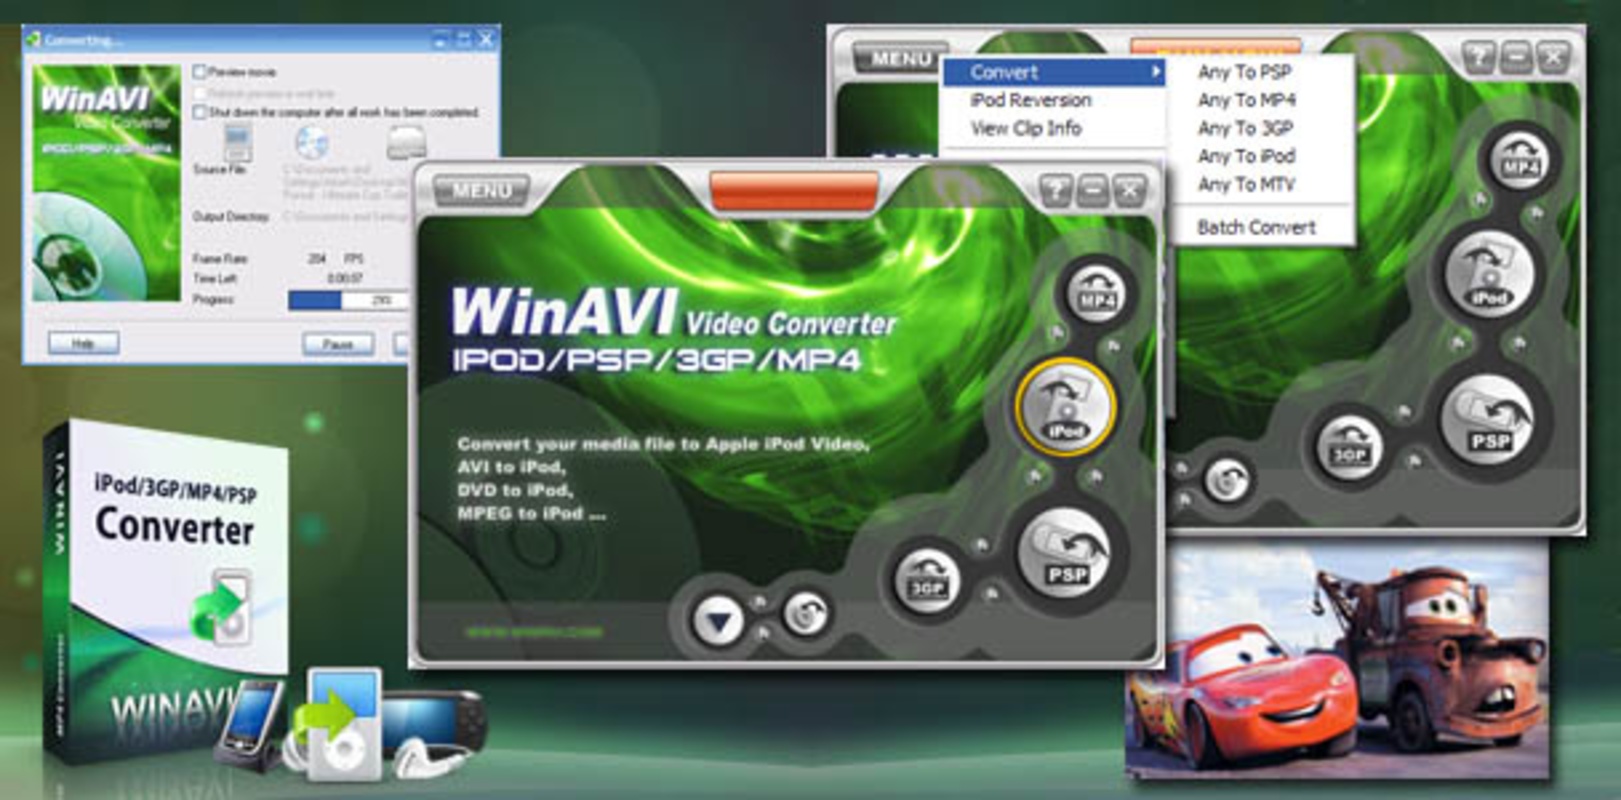 Winavi 3GP MP4 PSP iPod Video Converter 3.1 for Windows Screenshot 1